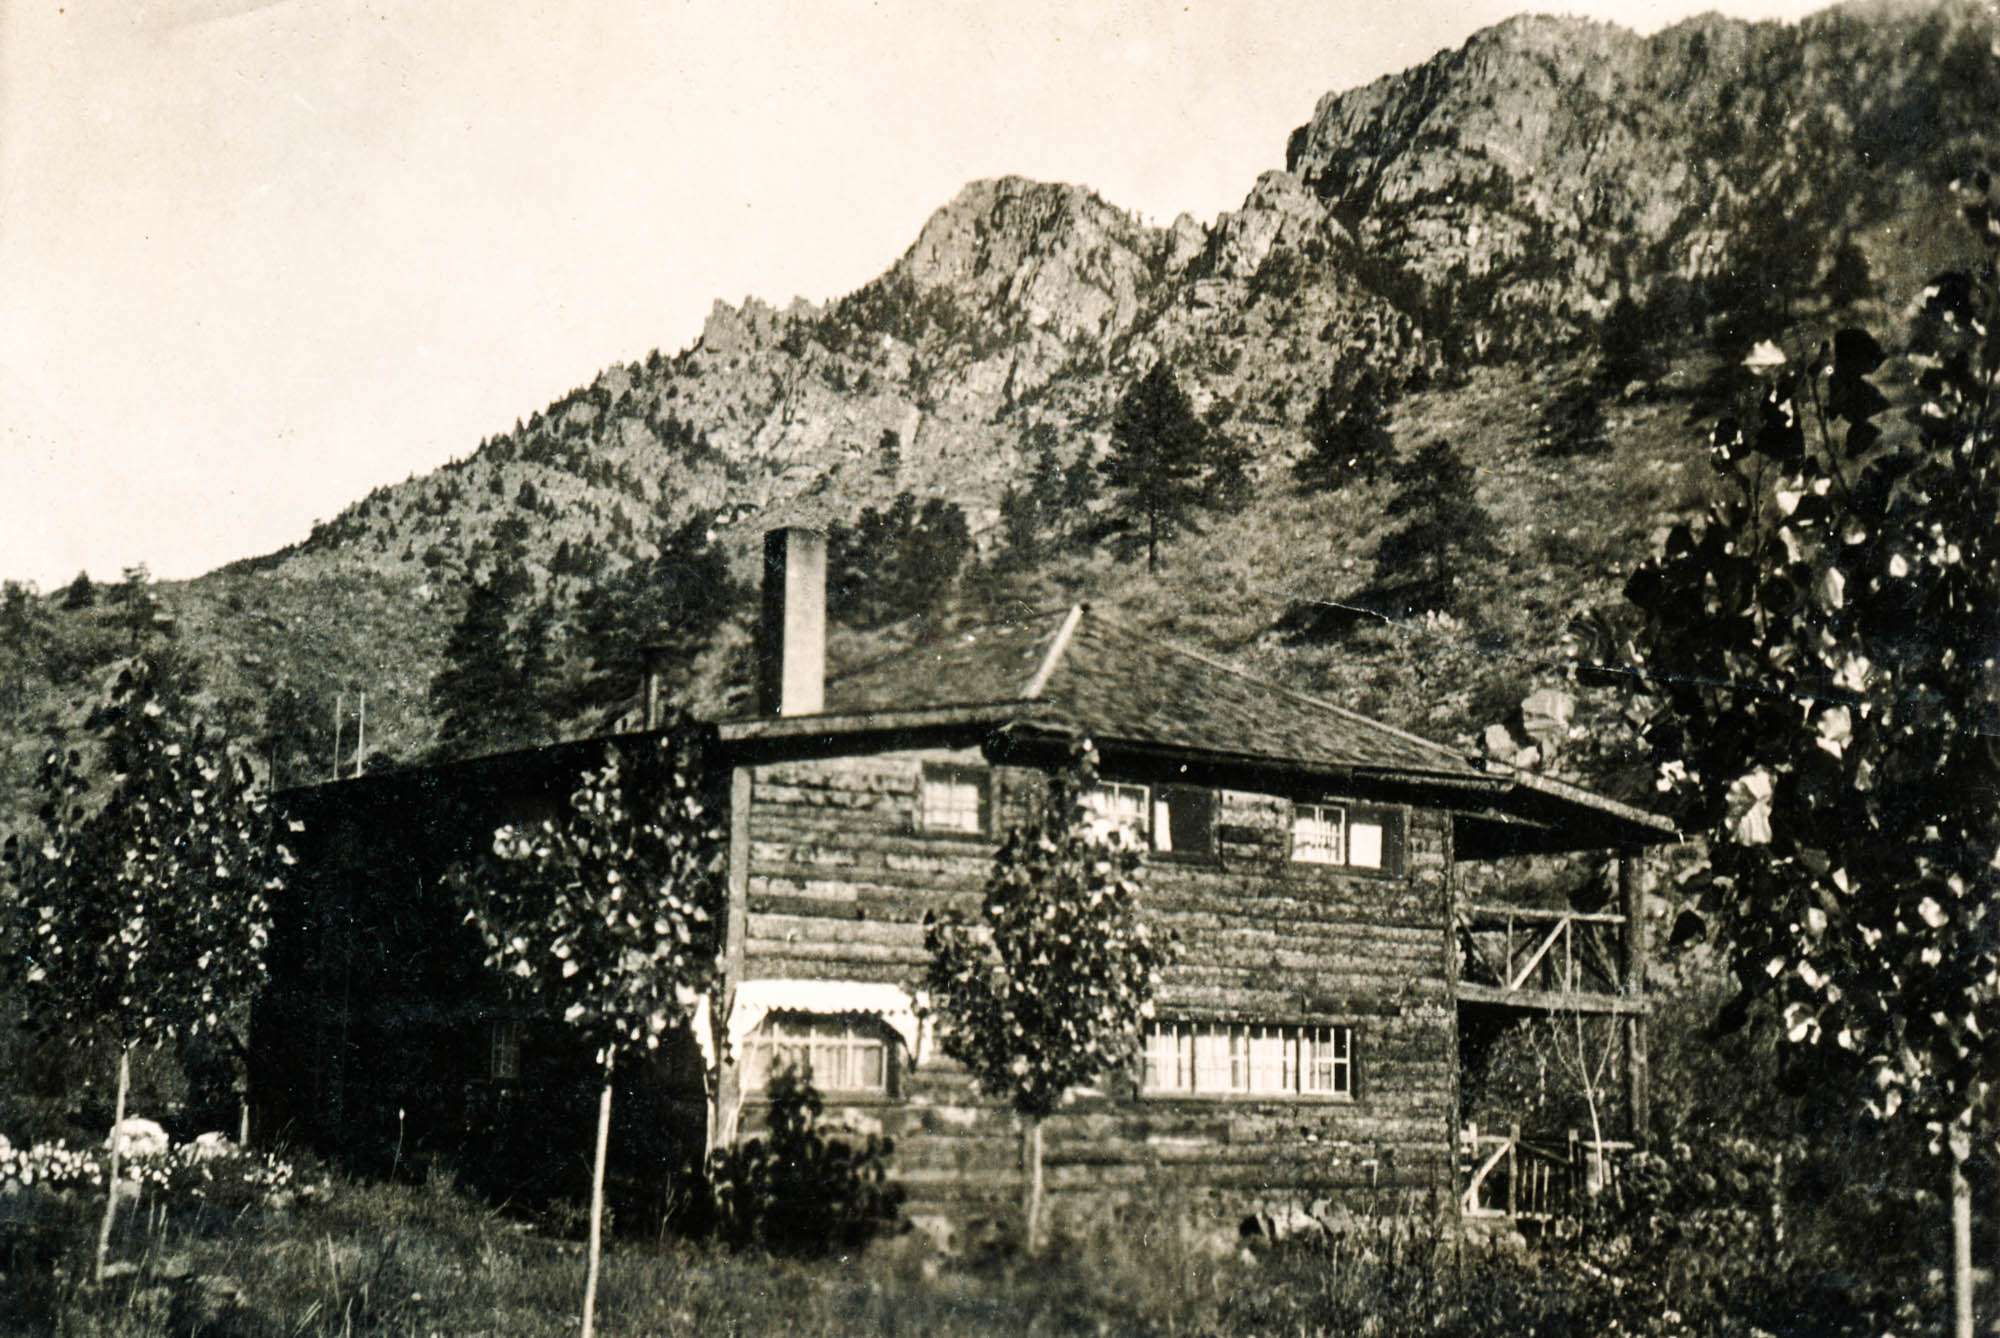 Idlewild Lodge - idlewildlodge.github.io - Circa 1920s - South East Corner Of Idlewild Lodge